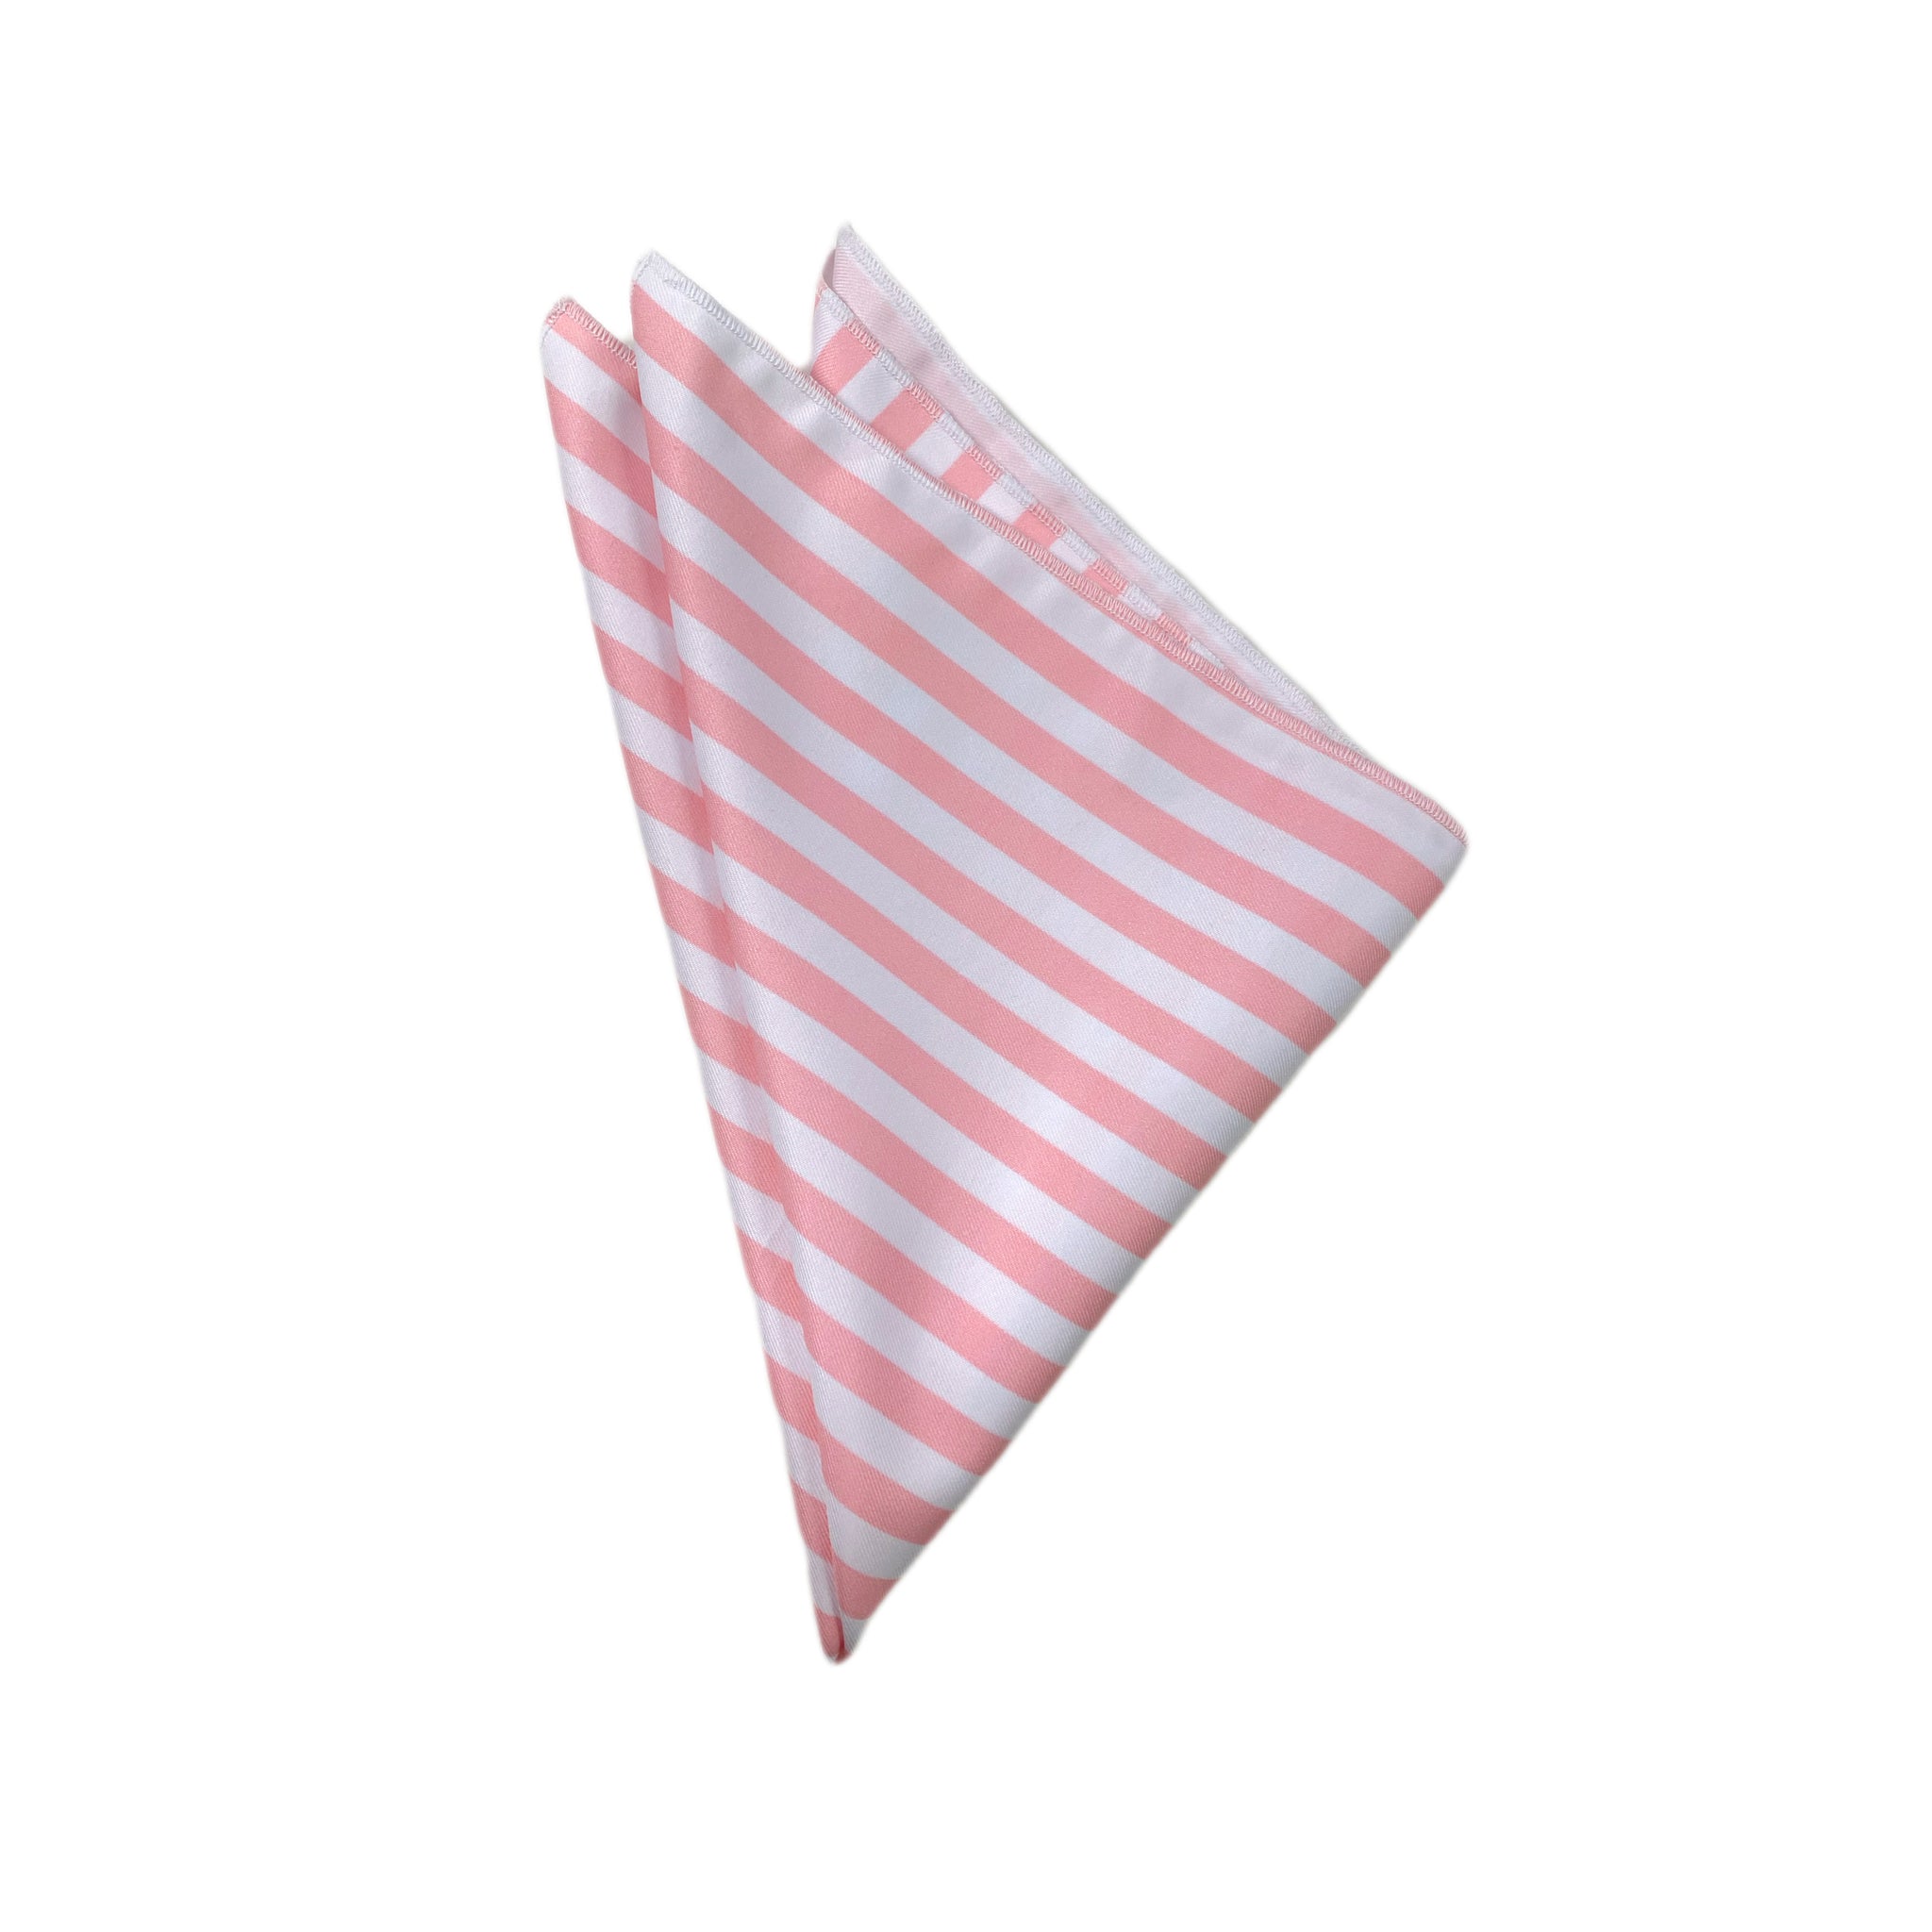 Cutesy Stripe Pink White Napkin